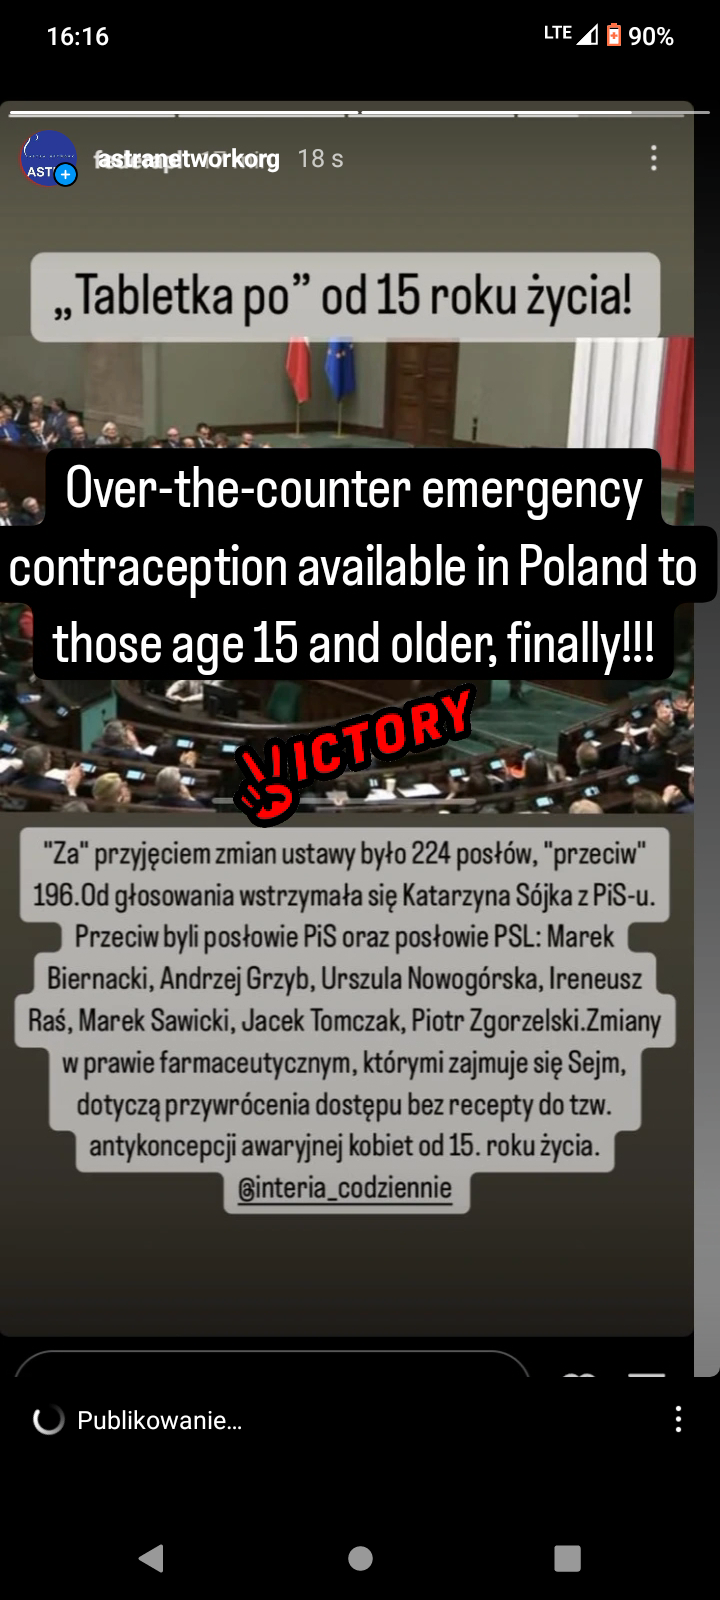 Poland closer to approve EC pills without a prescription